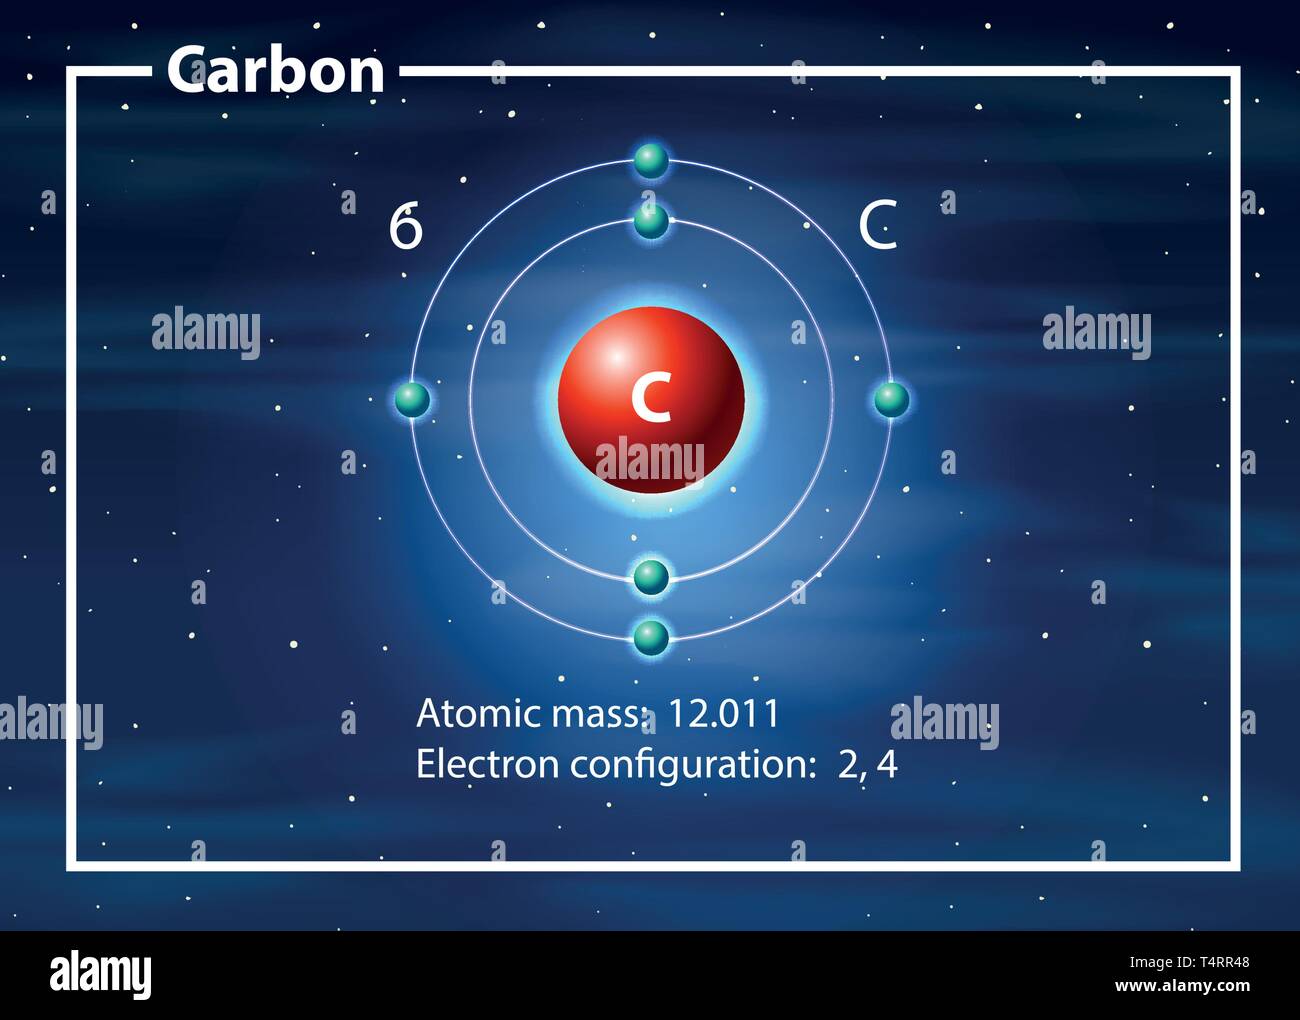 Carbon Atom Diagram Labeled